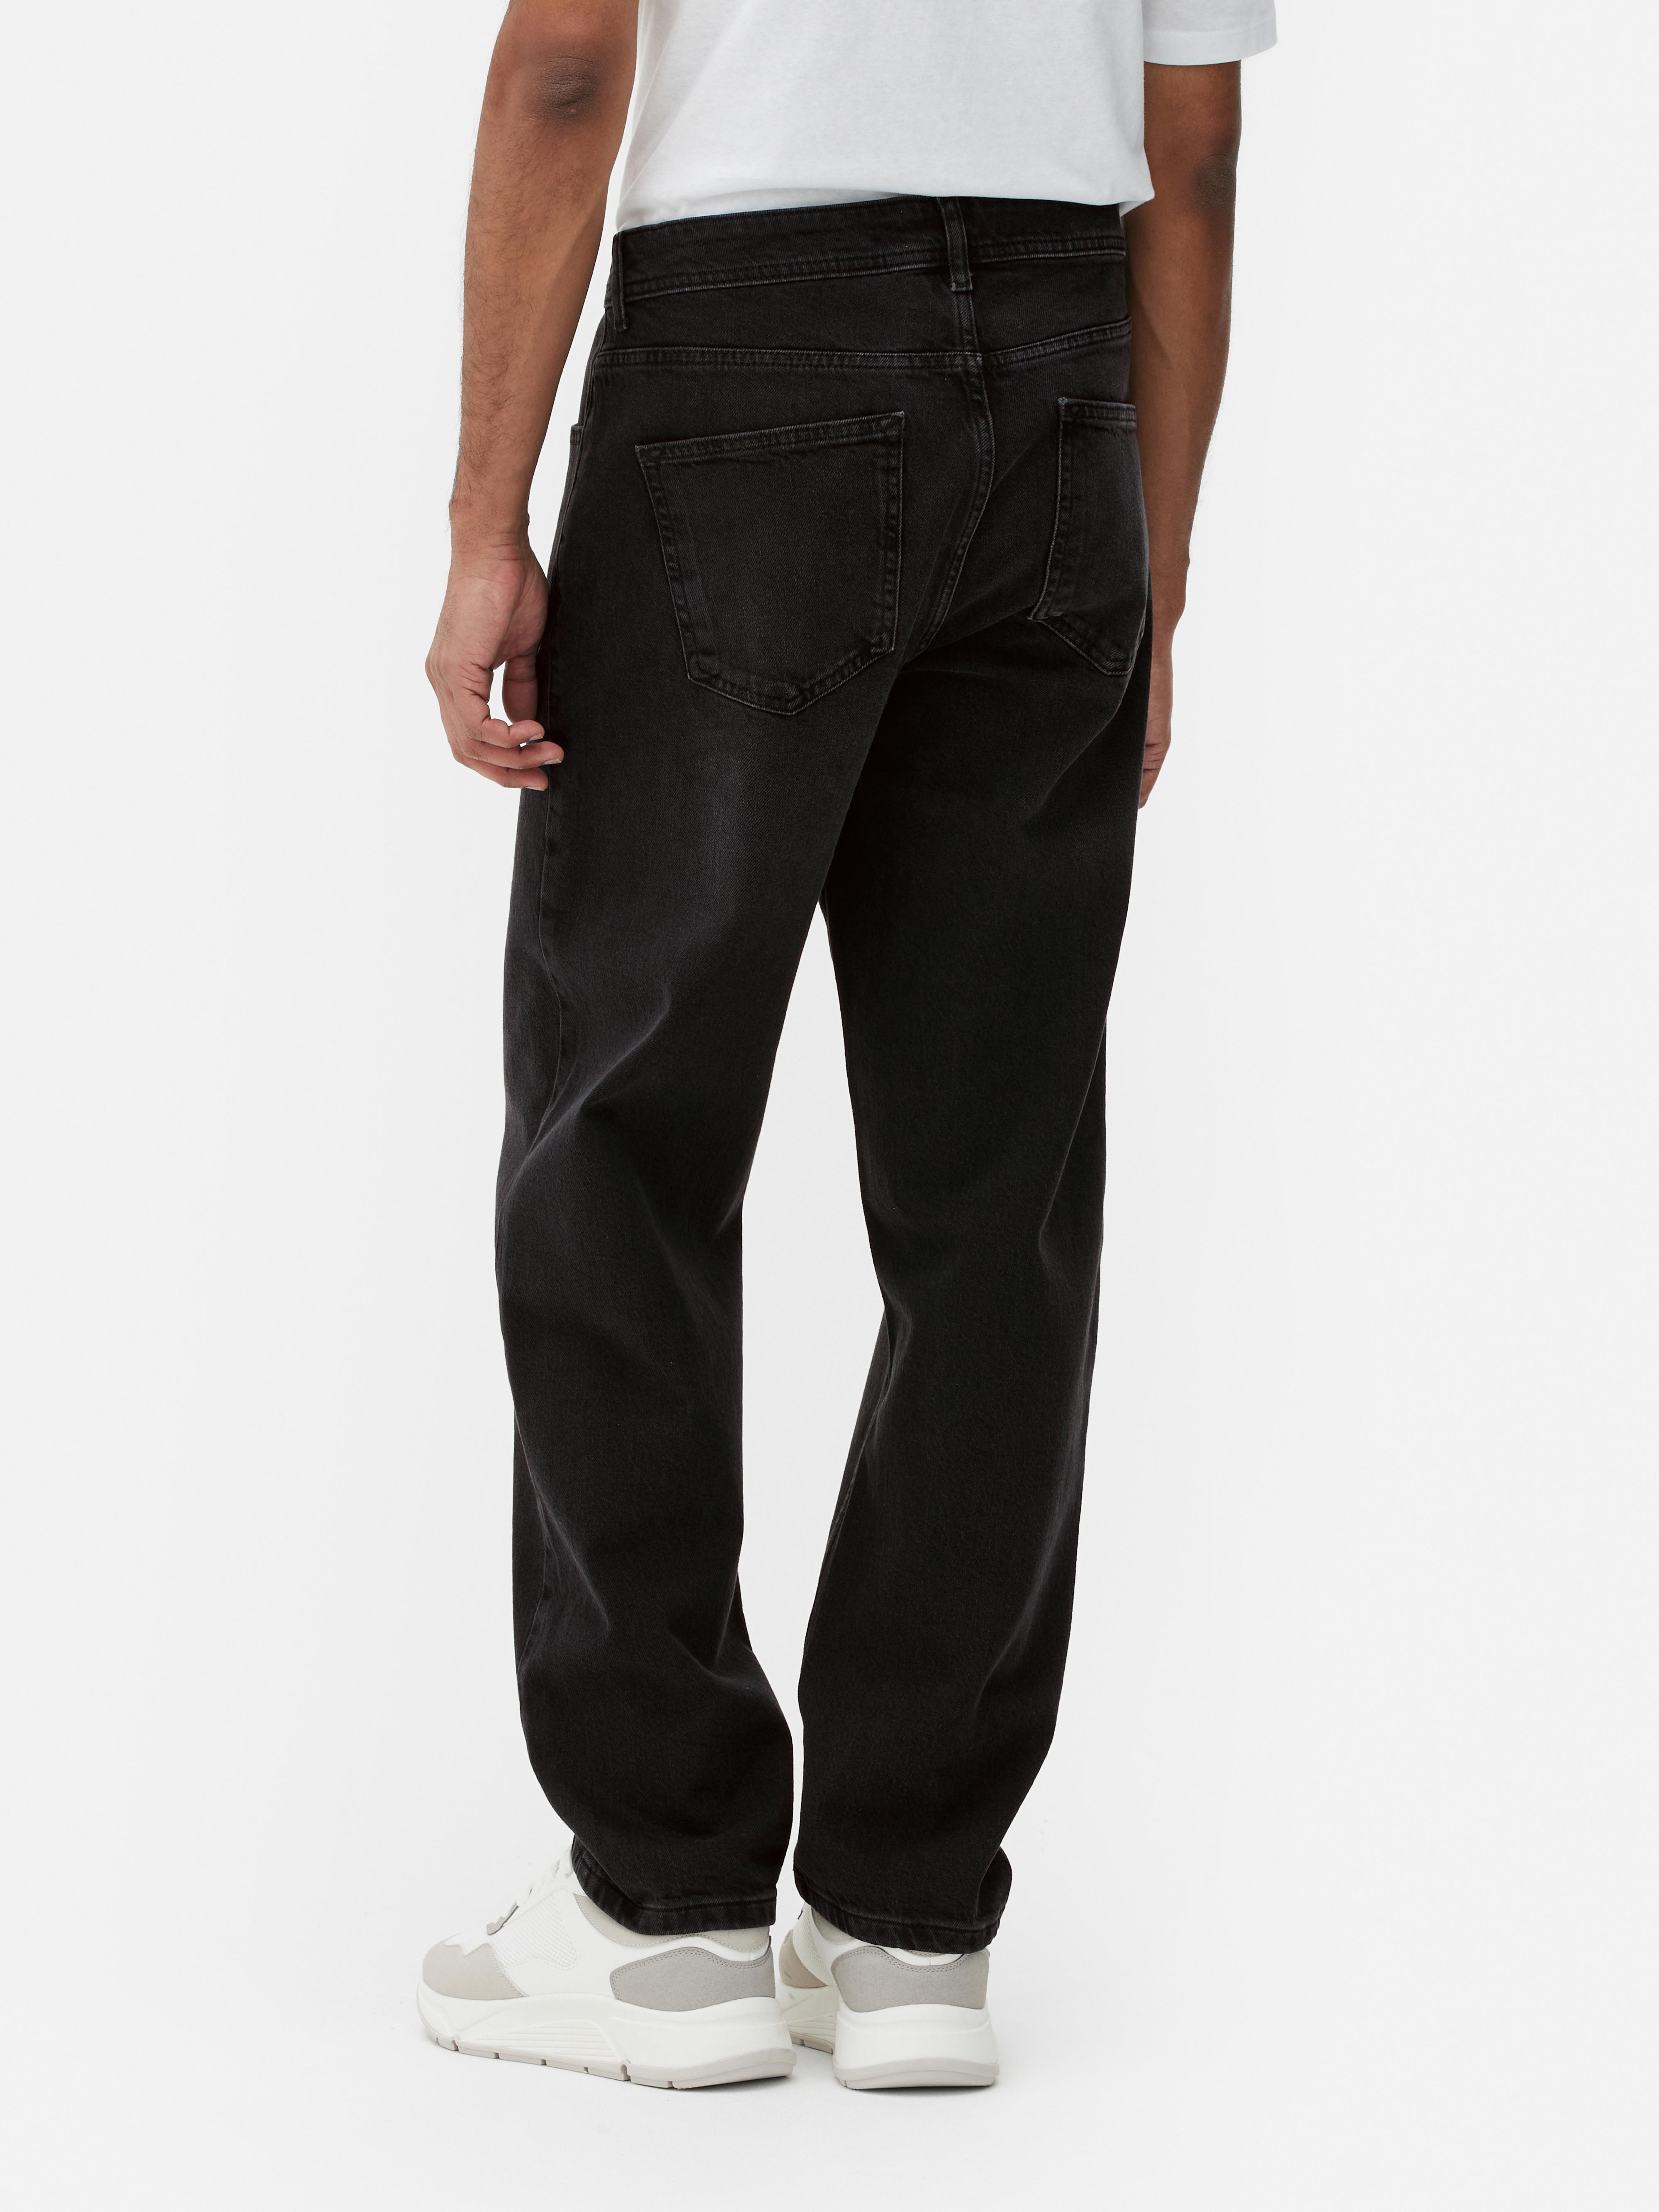 Men's Black Relaxed Fit Denim Jeans | Primark